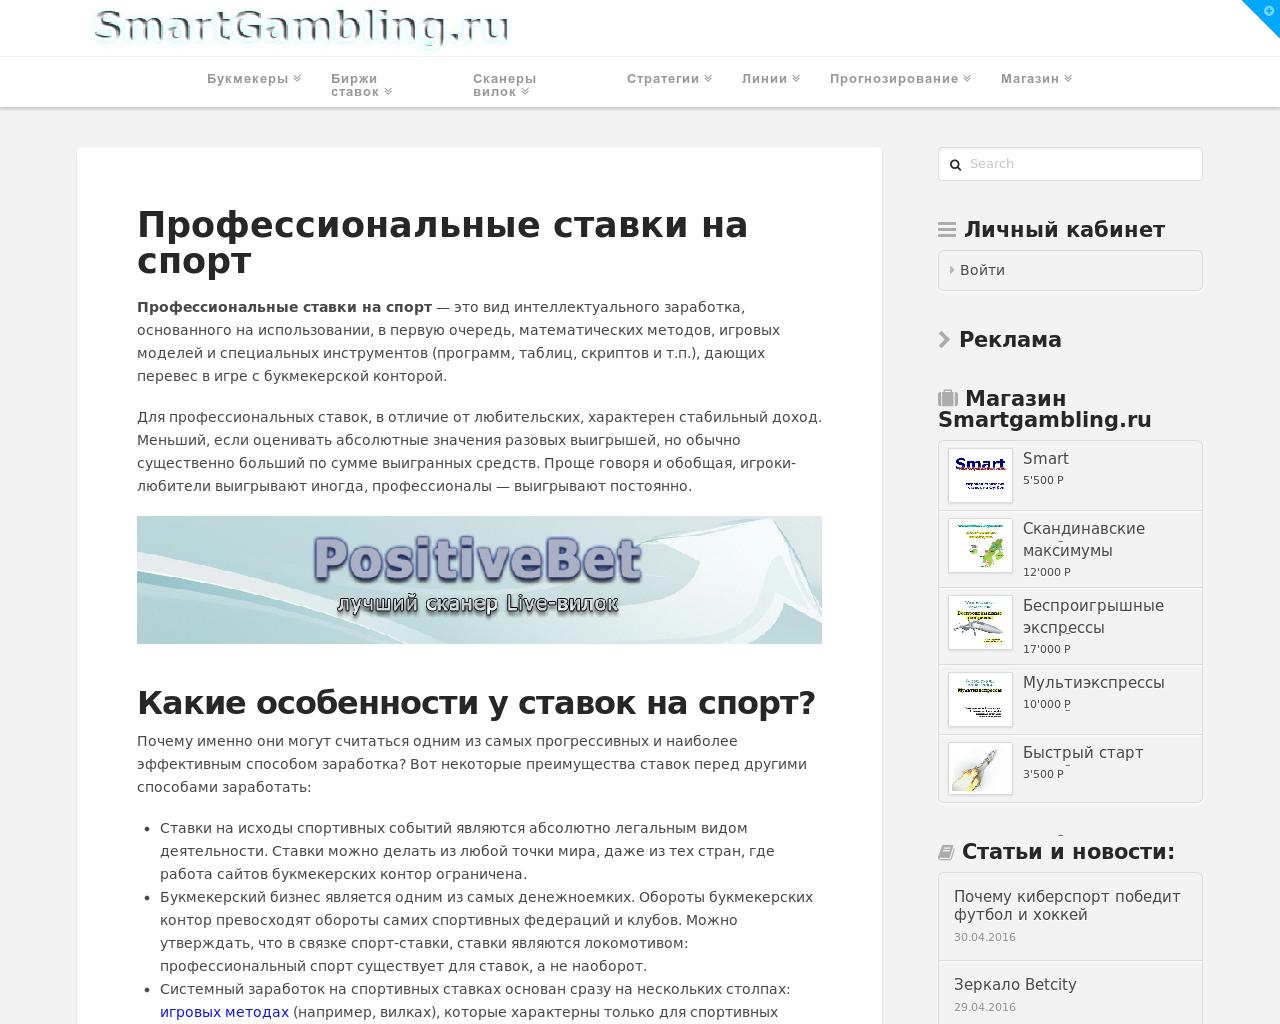 Изображение сайта smartgambling.ru в разрешении 1280x1024